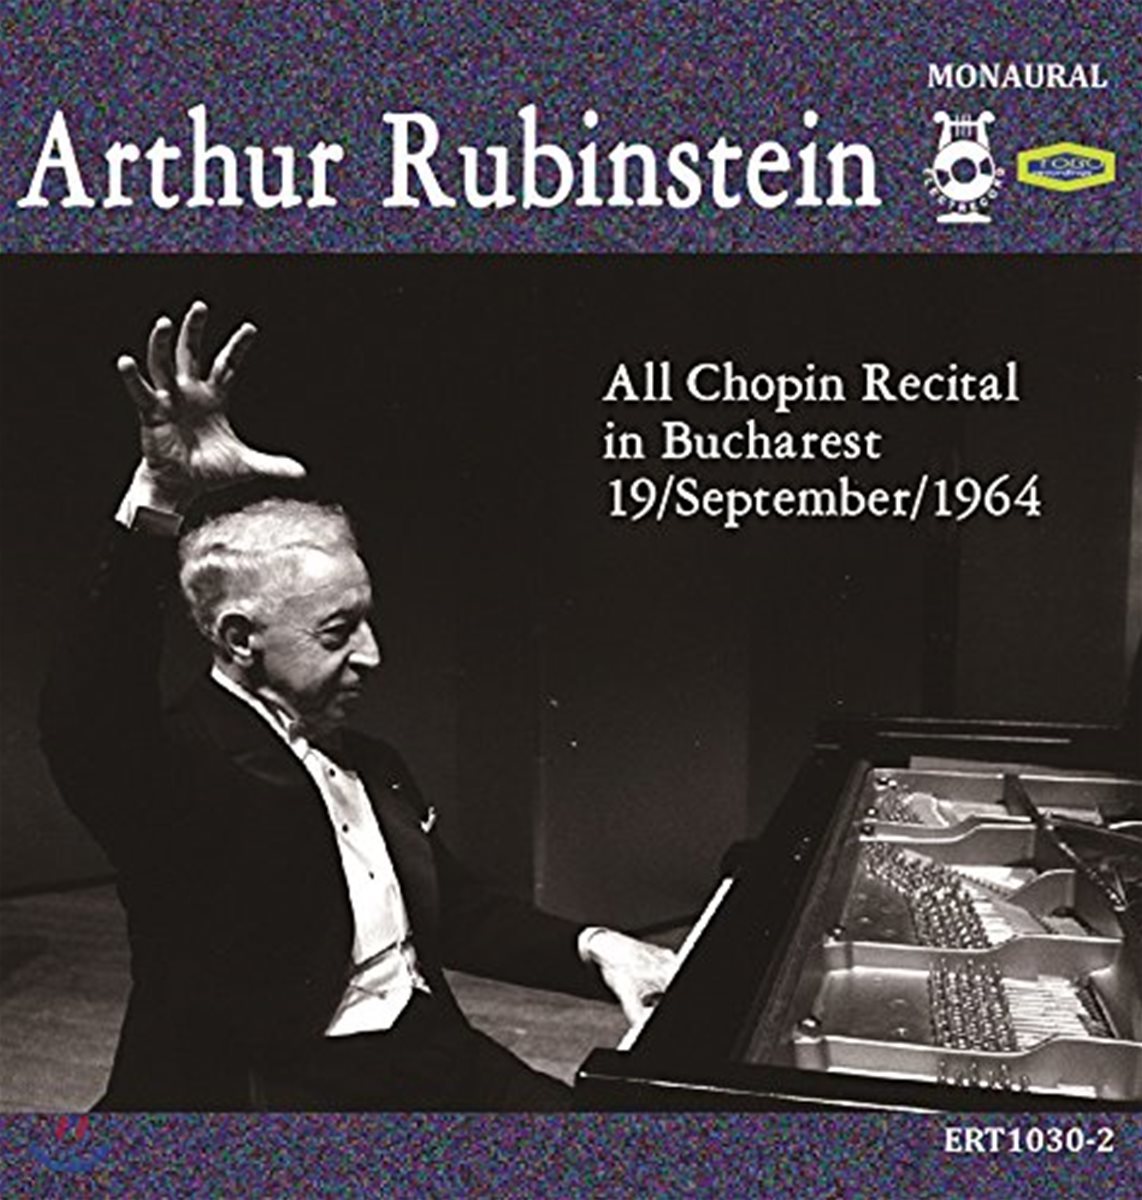 Arthur Rubinstein 1964년 부카레스트 쇼팽 리사이틀 (All Chopin Recital In Bucaharest) 아르투르 루빈스타인